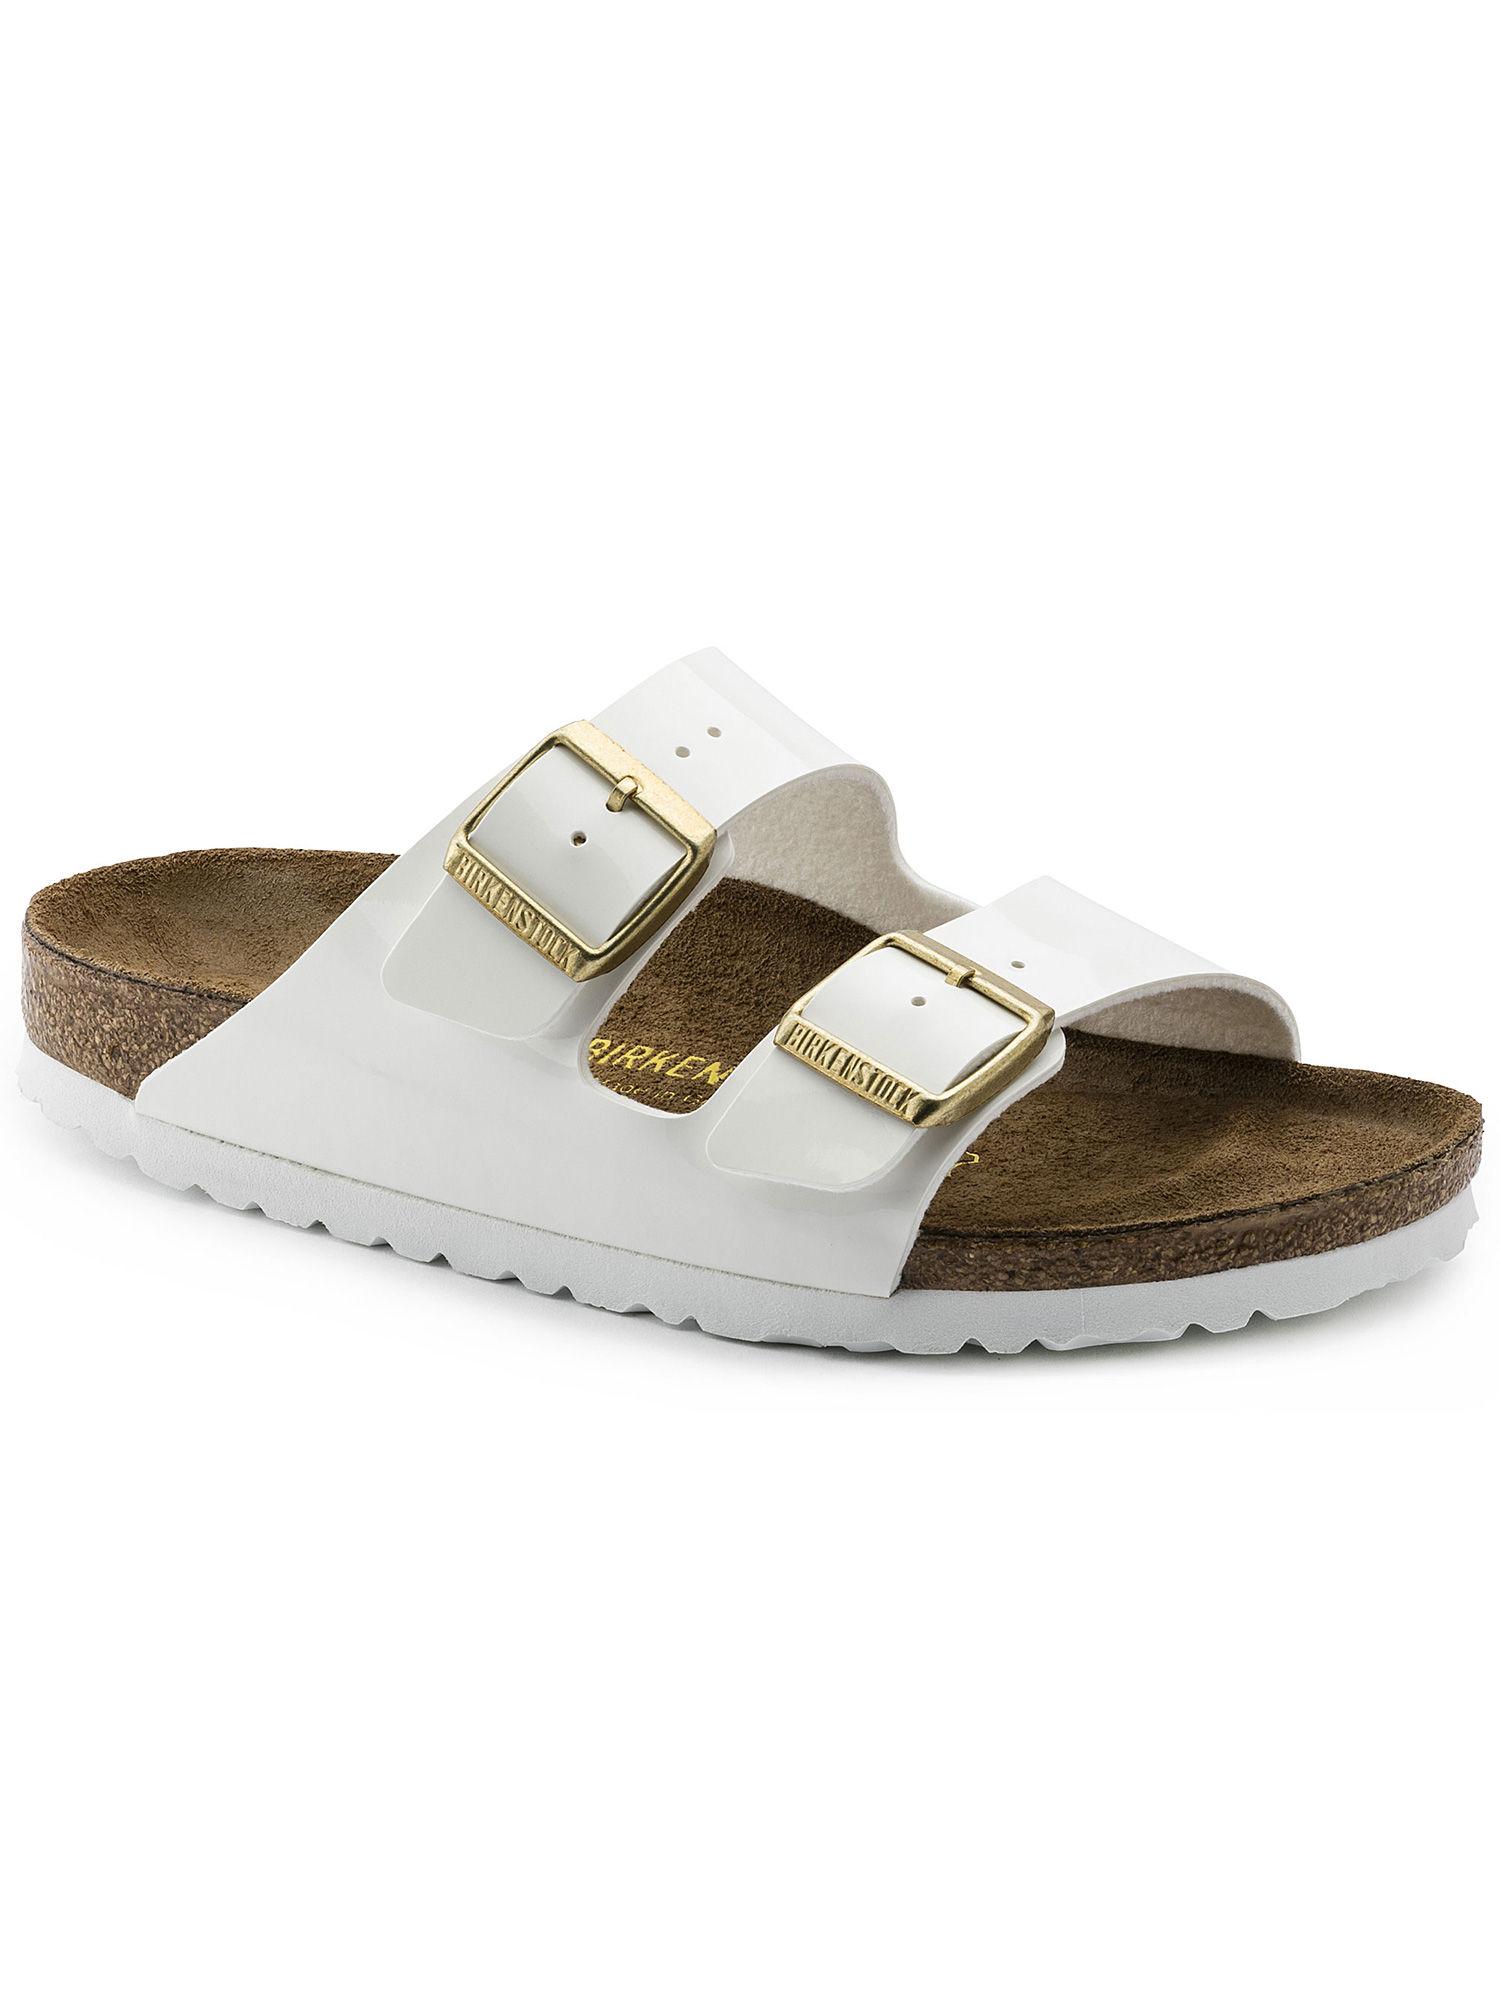 arizona birko-flor patent white narrow width unisex sandals